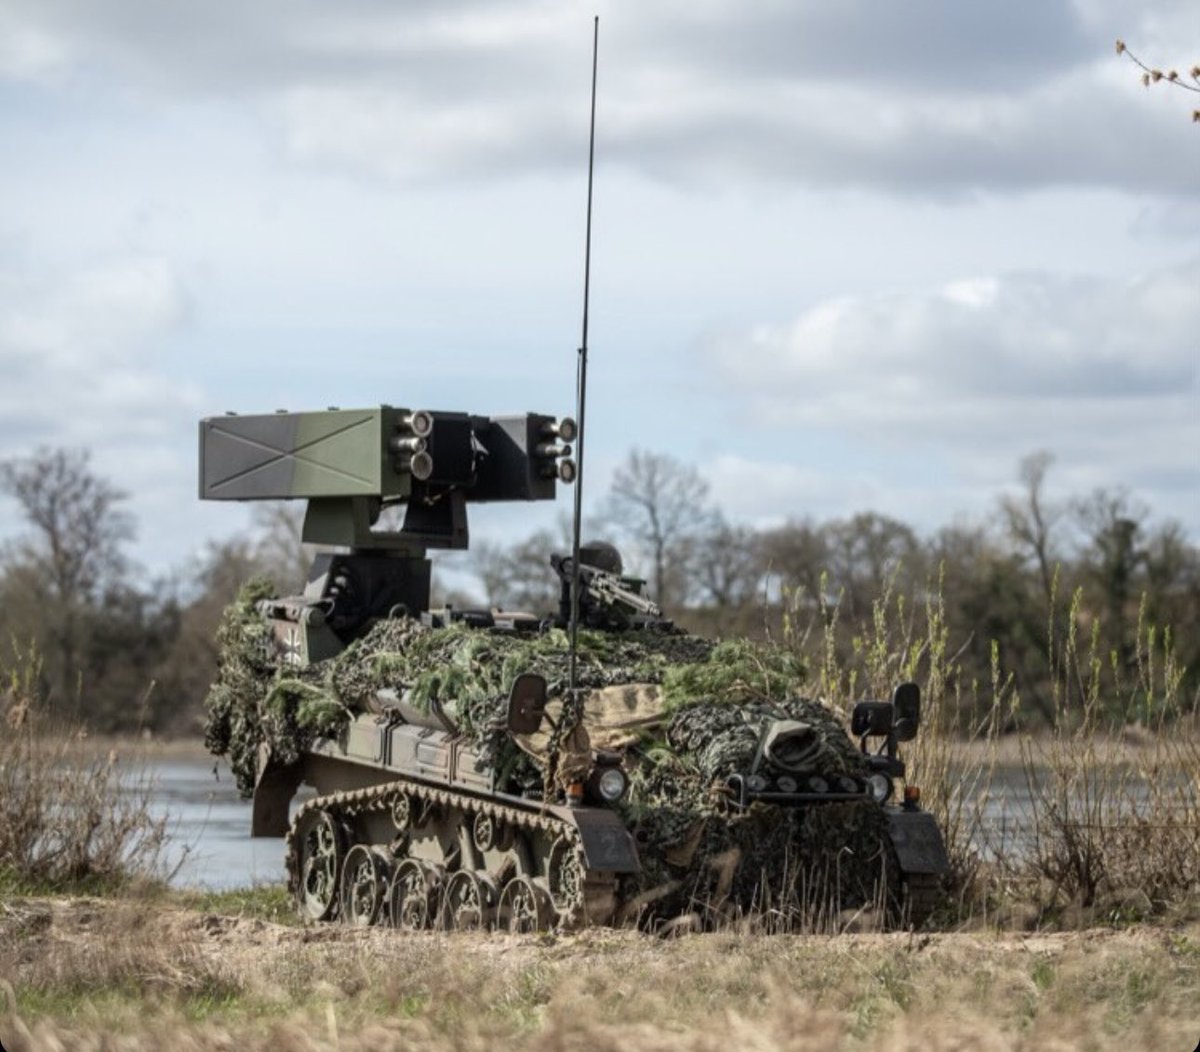 German Army “Ozelot” (Leichtes Flugabwehrsystem) at #Dragon24 NATO exercise in Poland. #SteadFastDefender #Bundeswehr